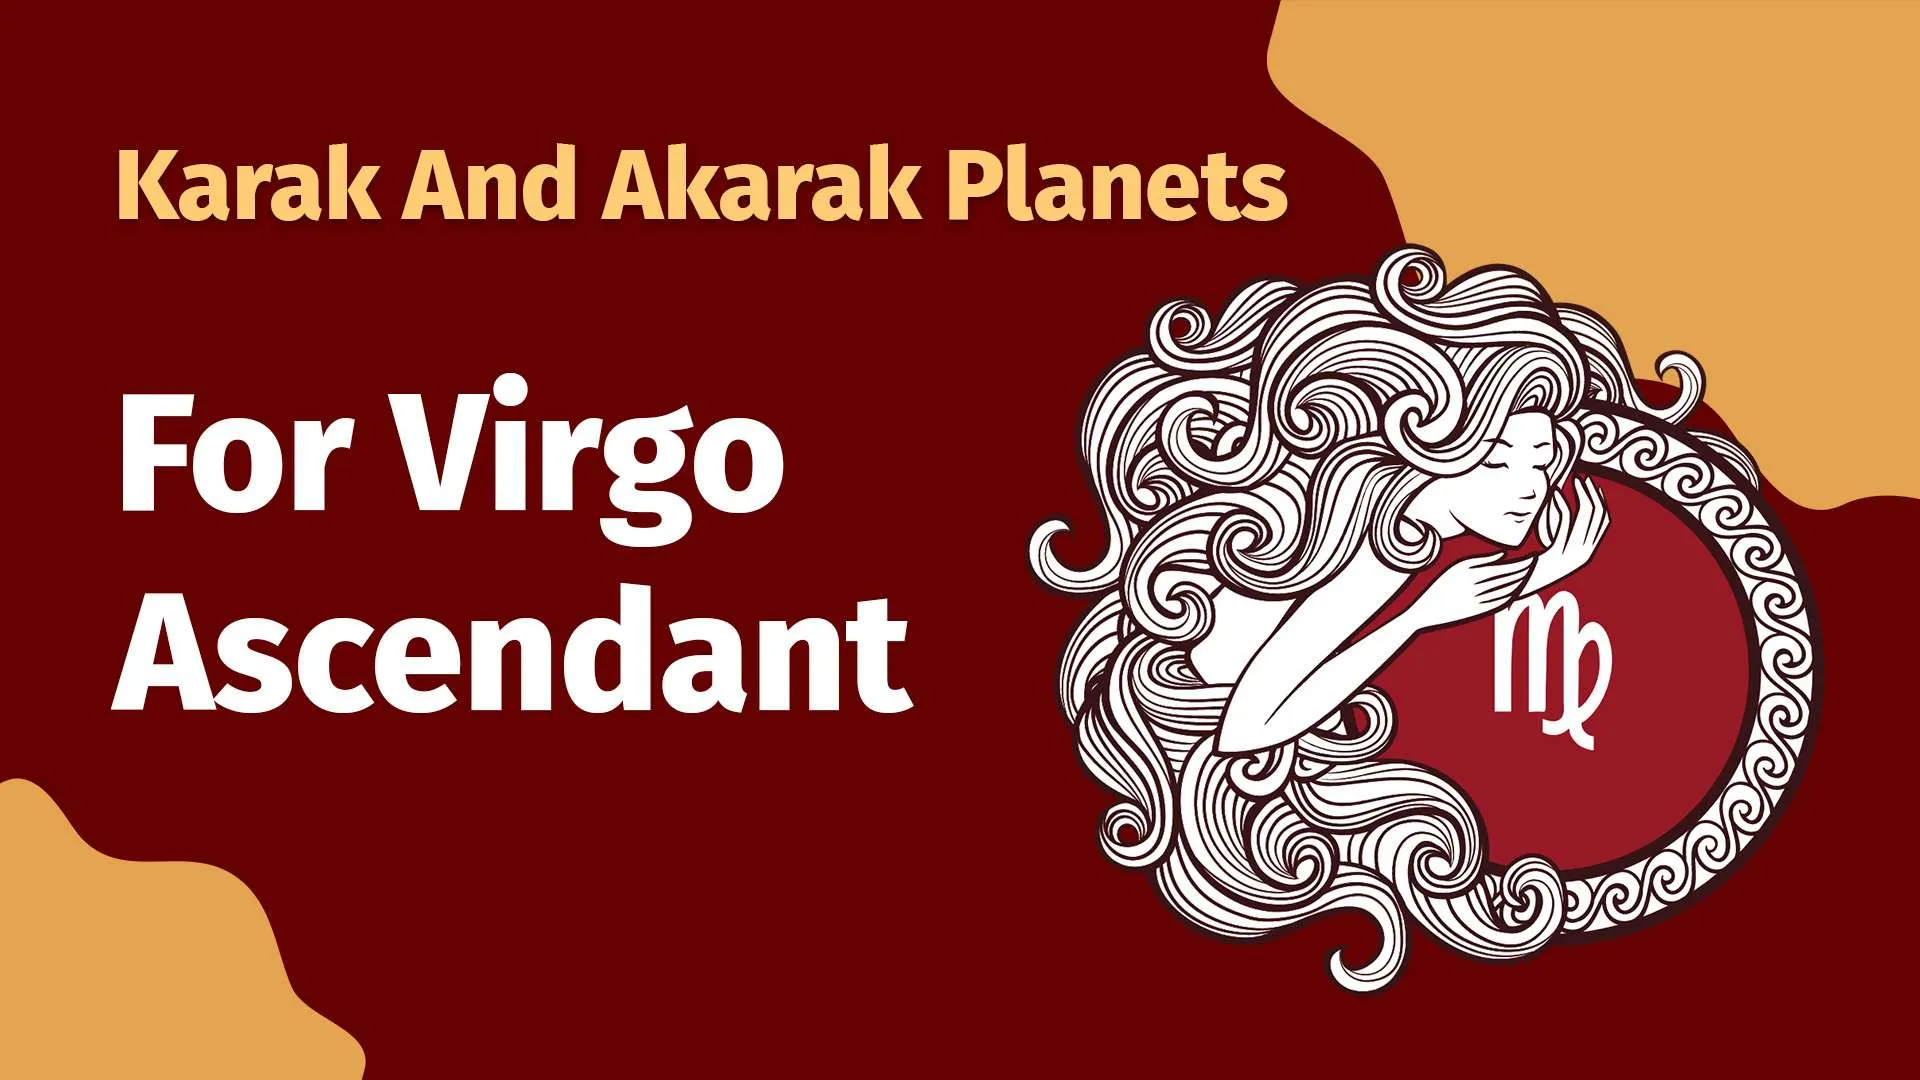 Karak and Akarak planets of Virgo Ascendants